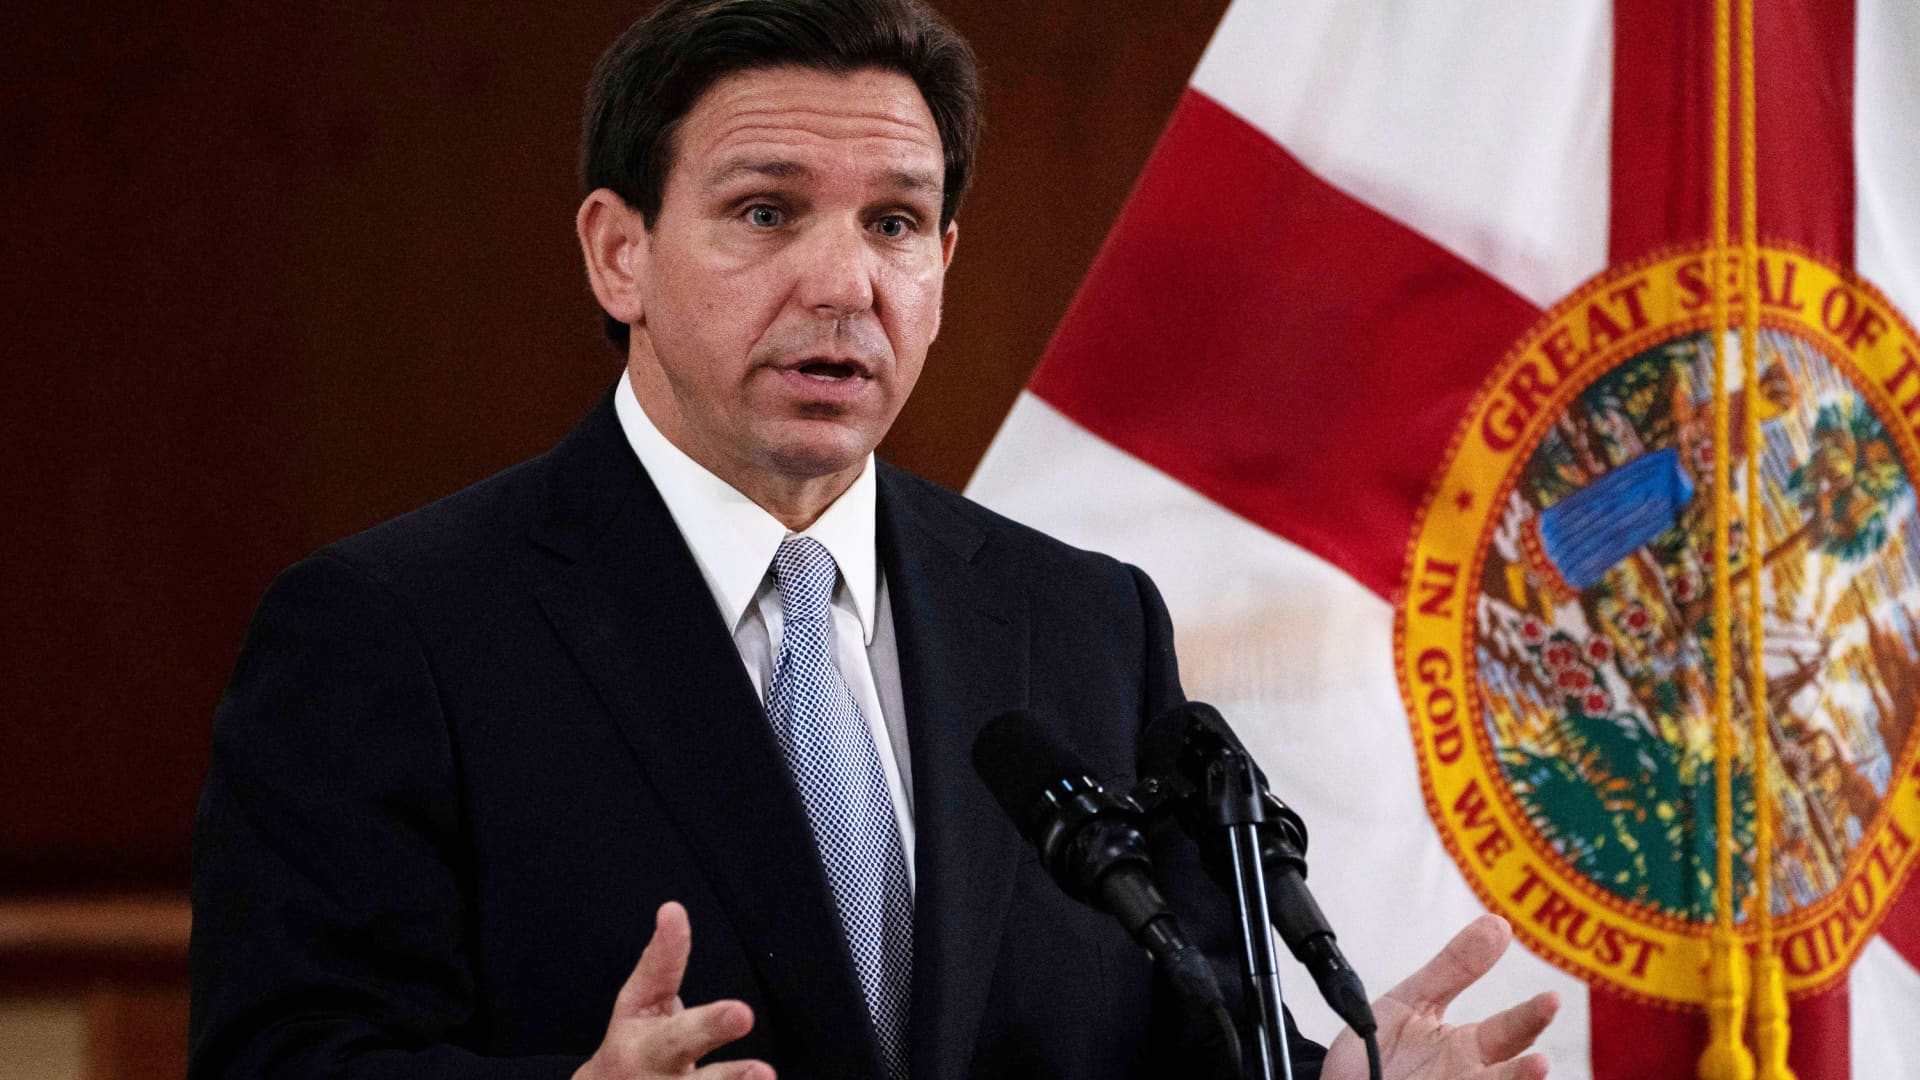 Florida Gov. Ron DeSantis fuels 2024 speculation in speech touting state record